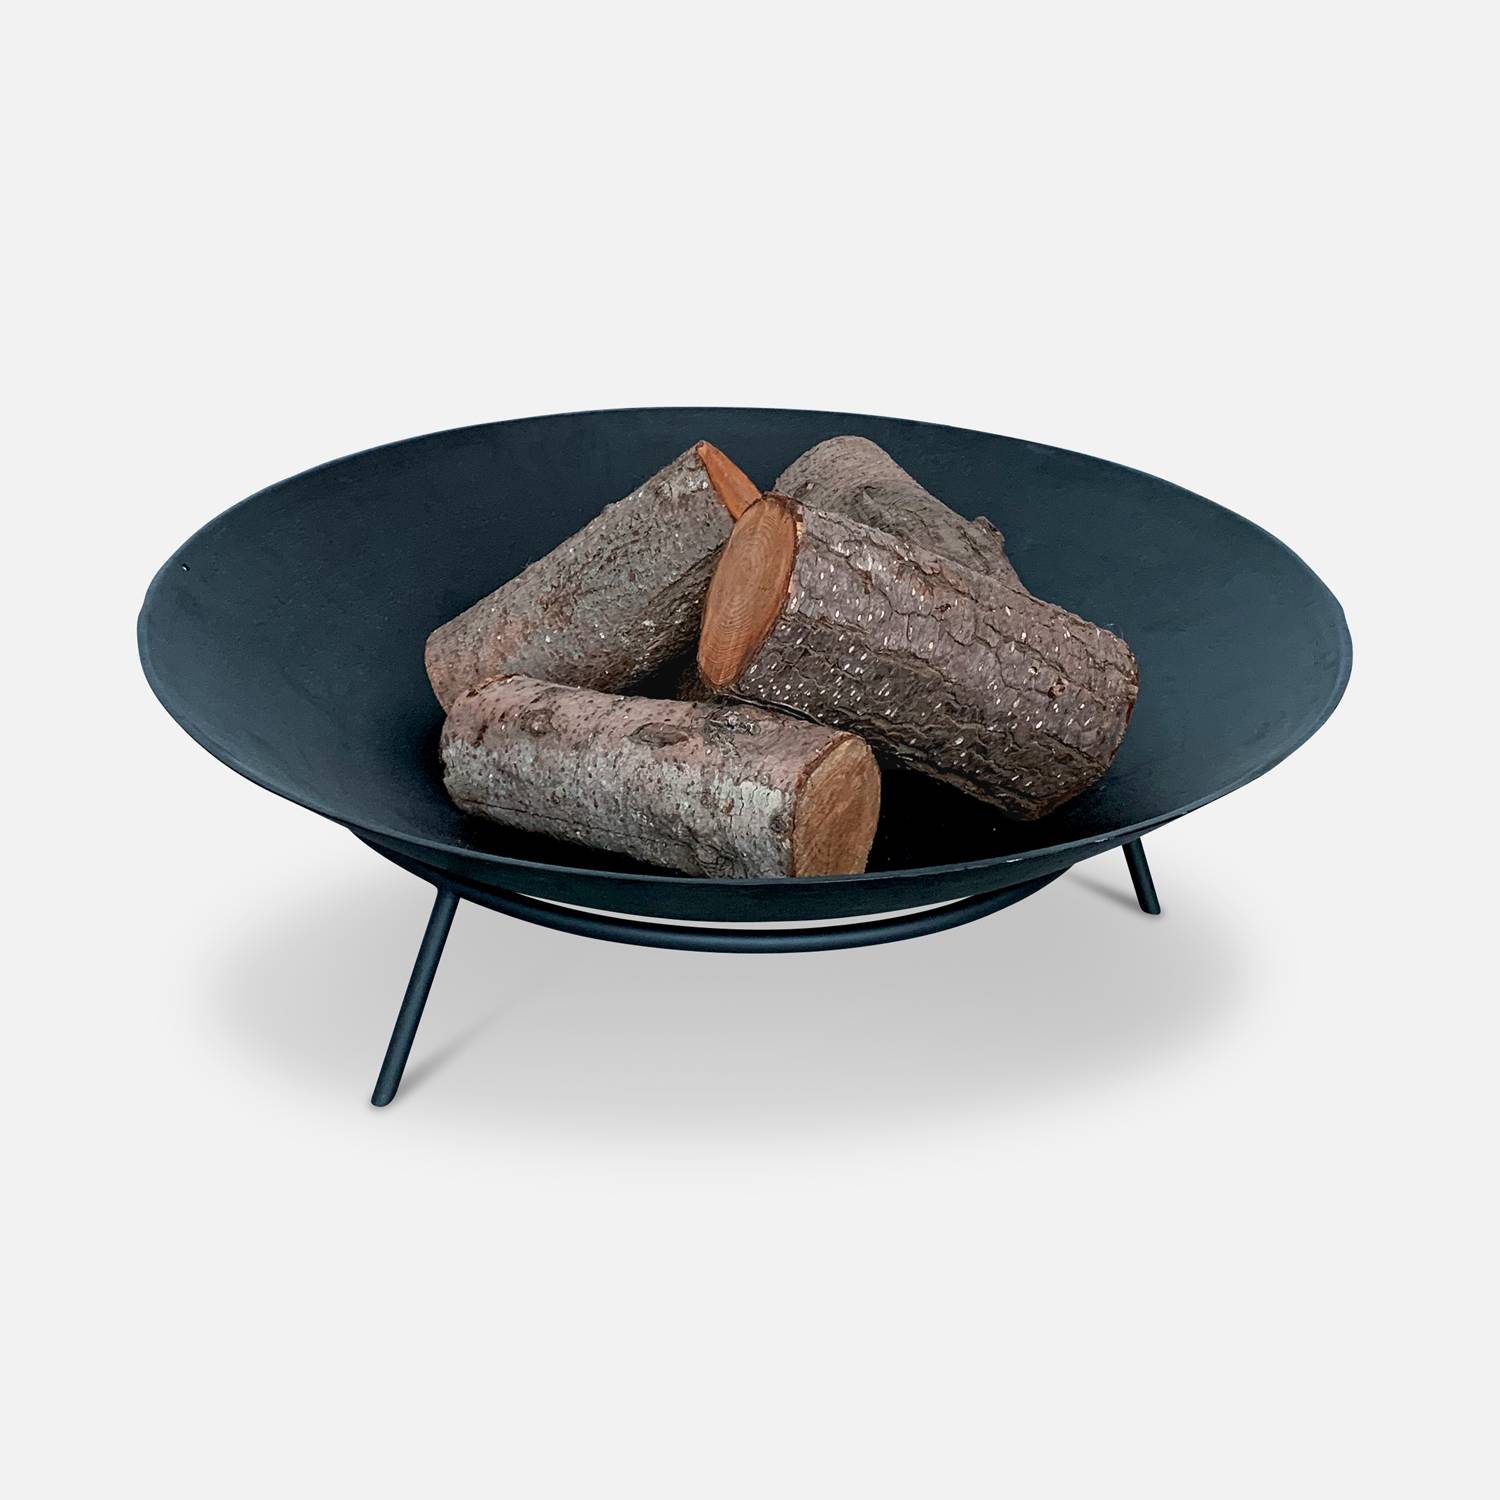 Black cast iron fire pit 90cm diameter with 3 legged base - steel legs, sleek design - FUJI  Photo4